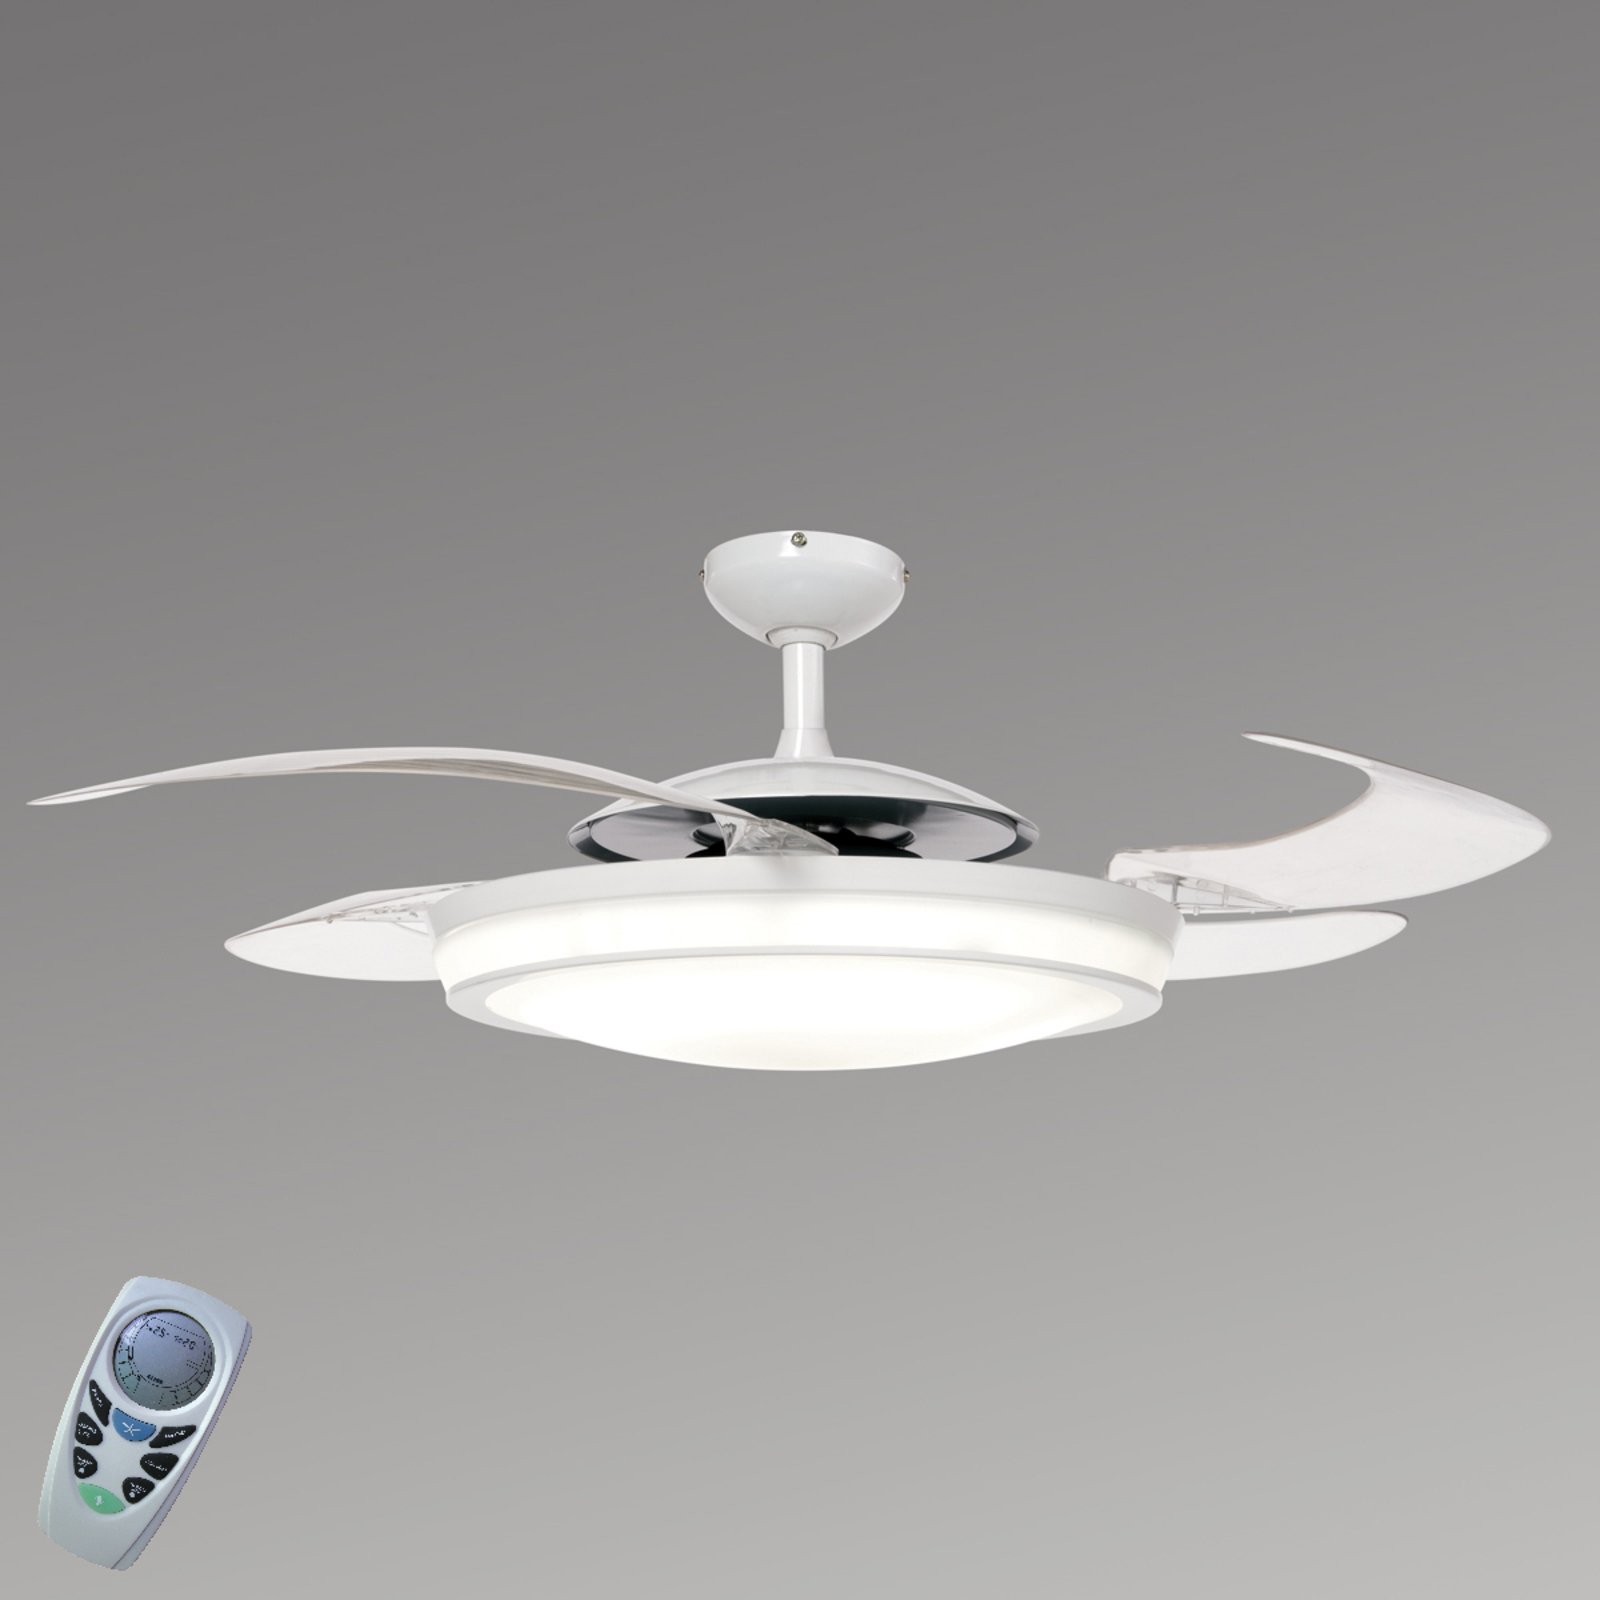 Beacon ceiling fan Fanaway Evo 2 with light, white, quiet